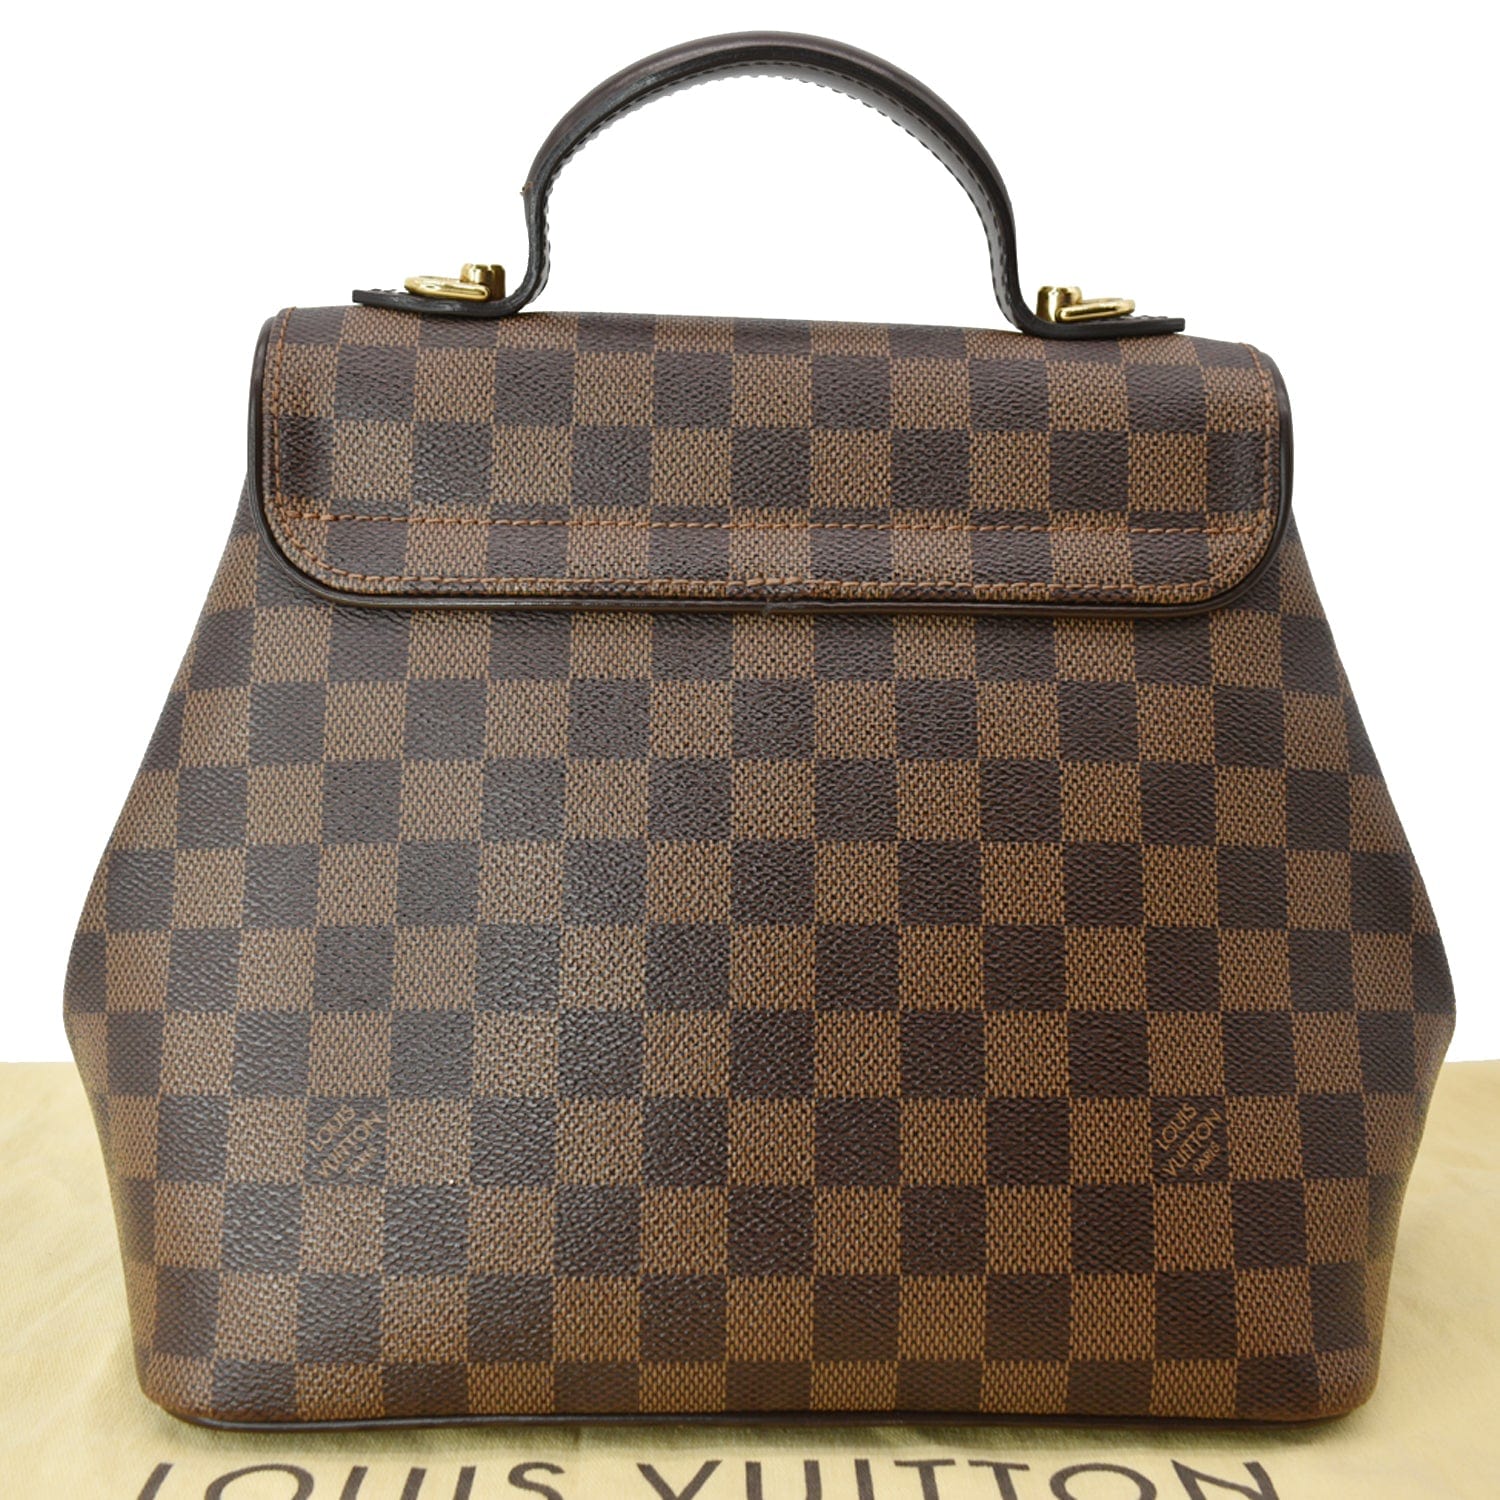 BEAUTIFUL Louis Vuitton Bergamo PM! Shop it NOW on www.mymoshposh.com!